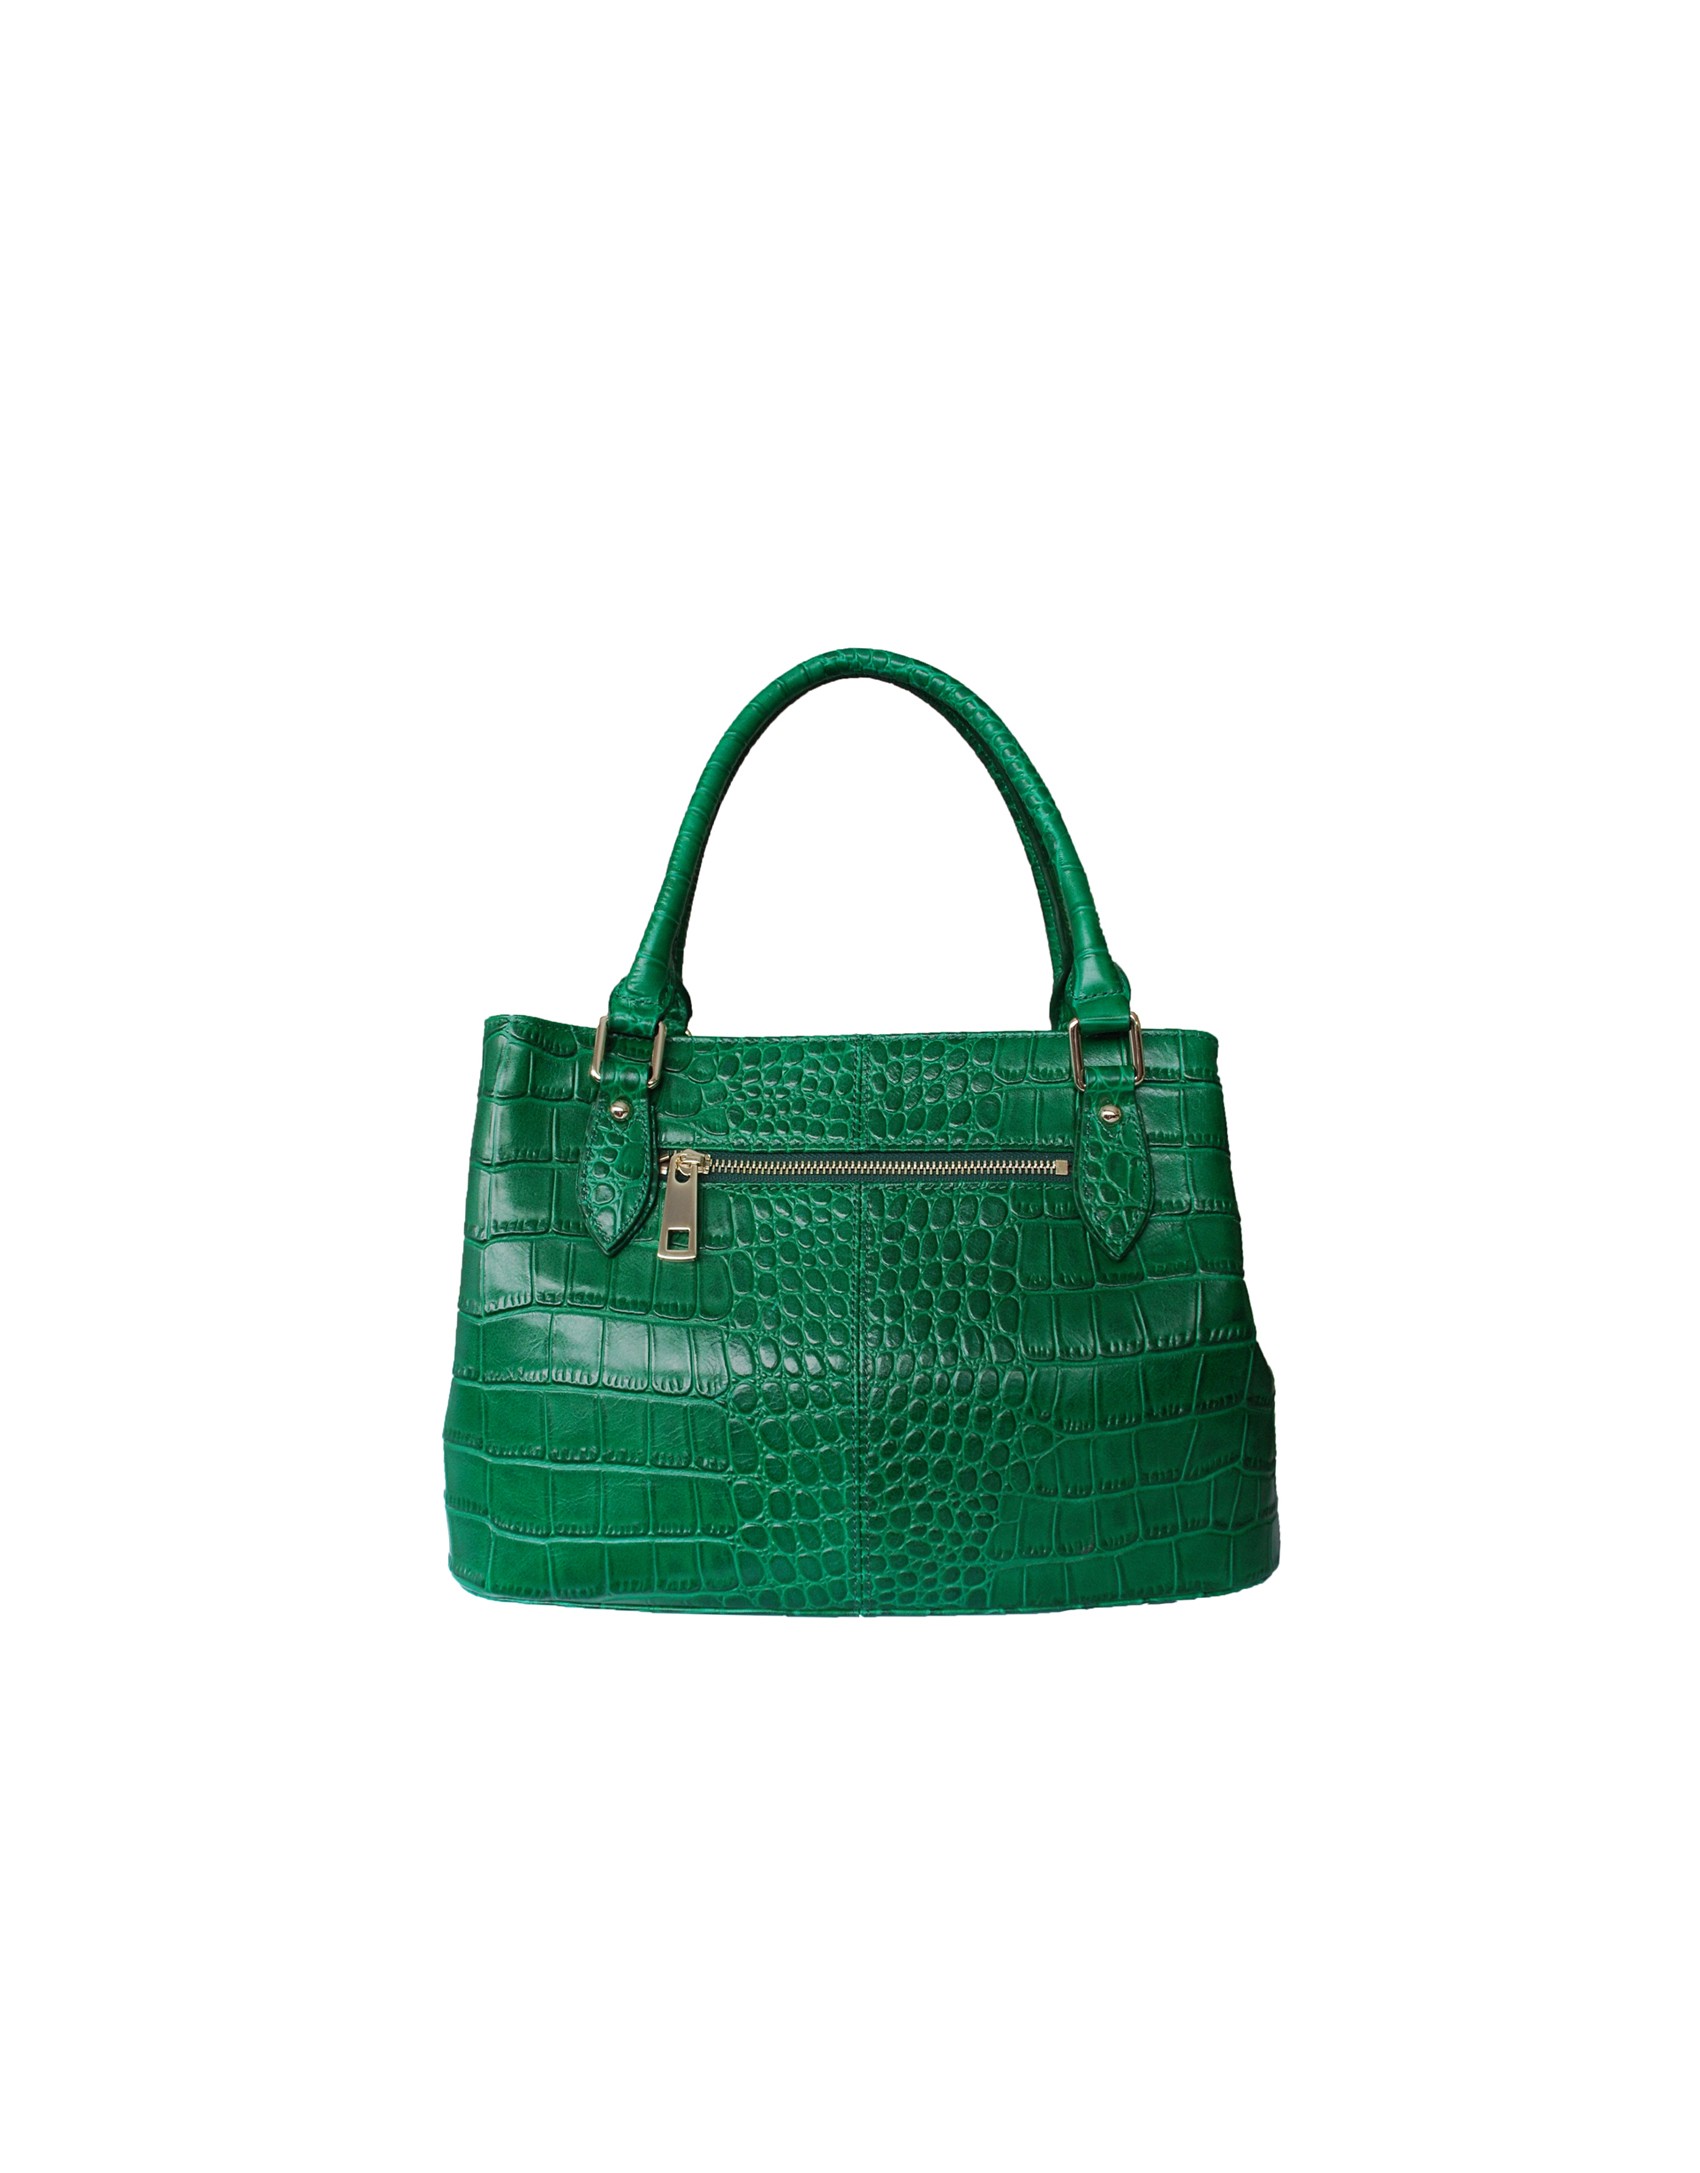 Medium size green tote bag - Roberto Verino